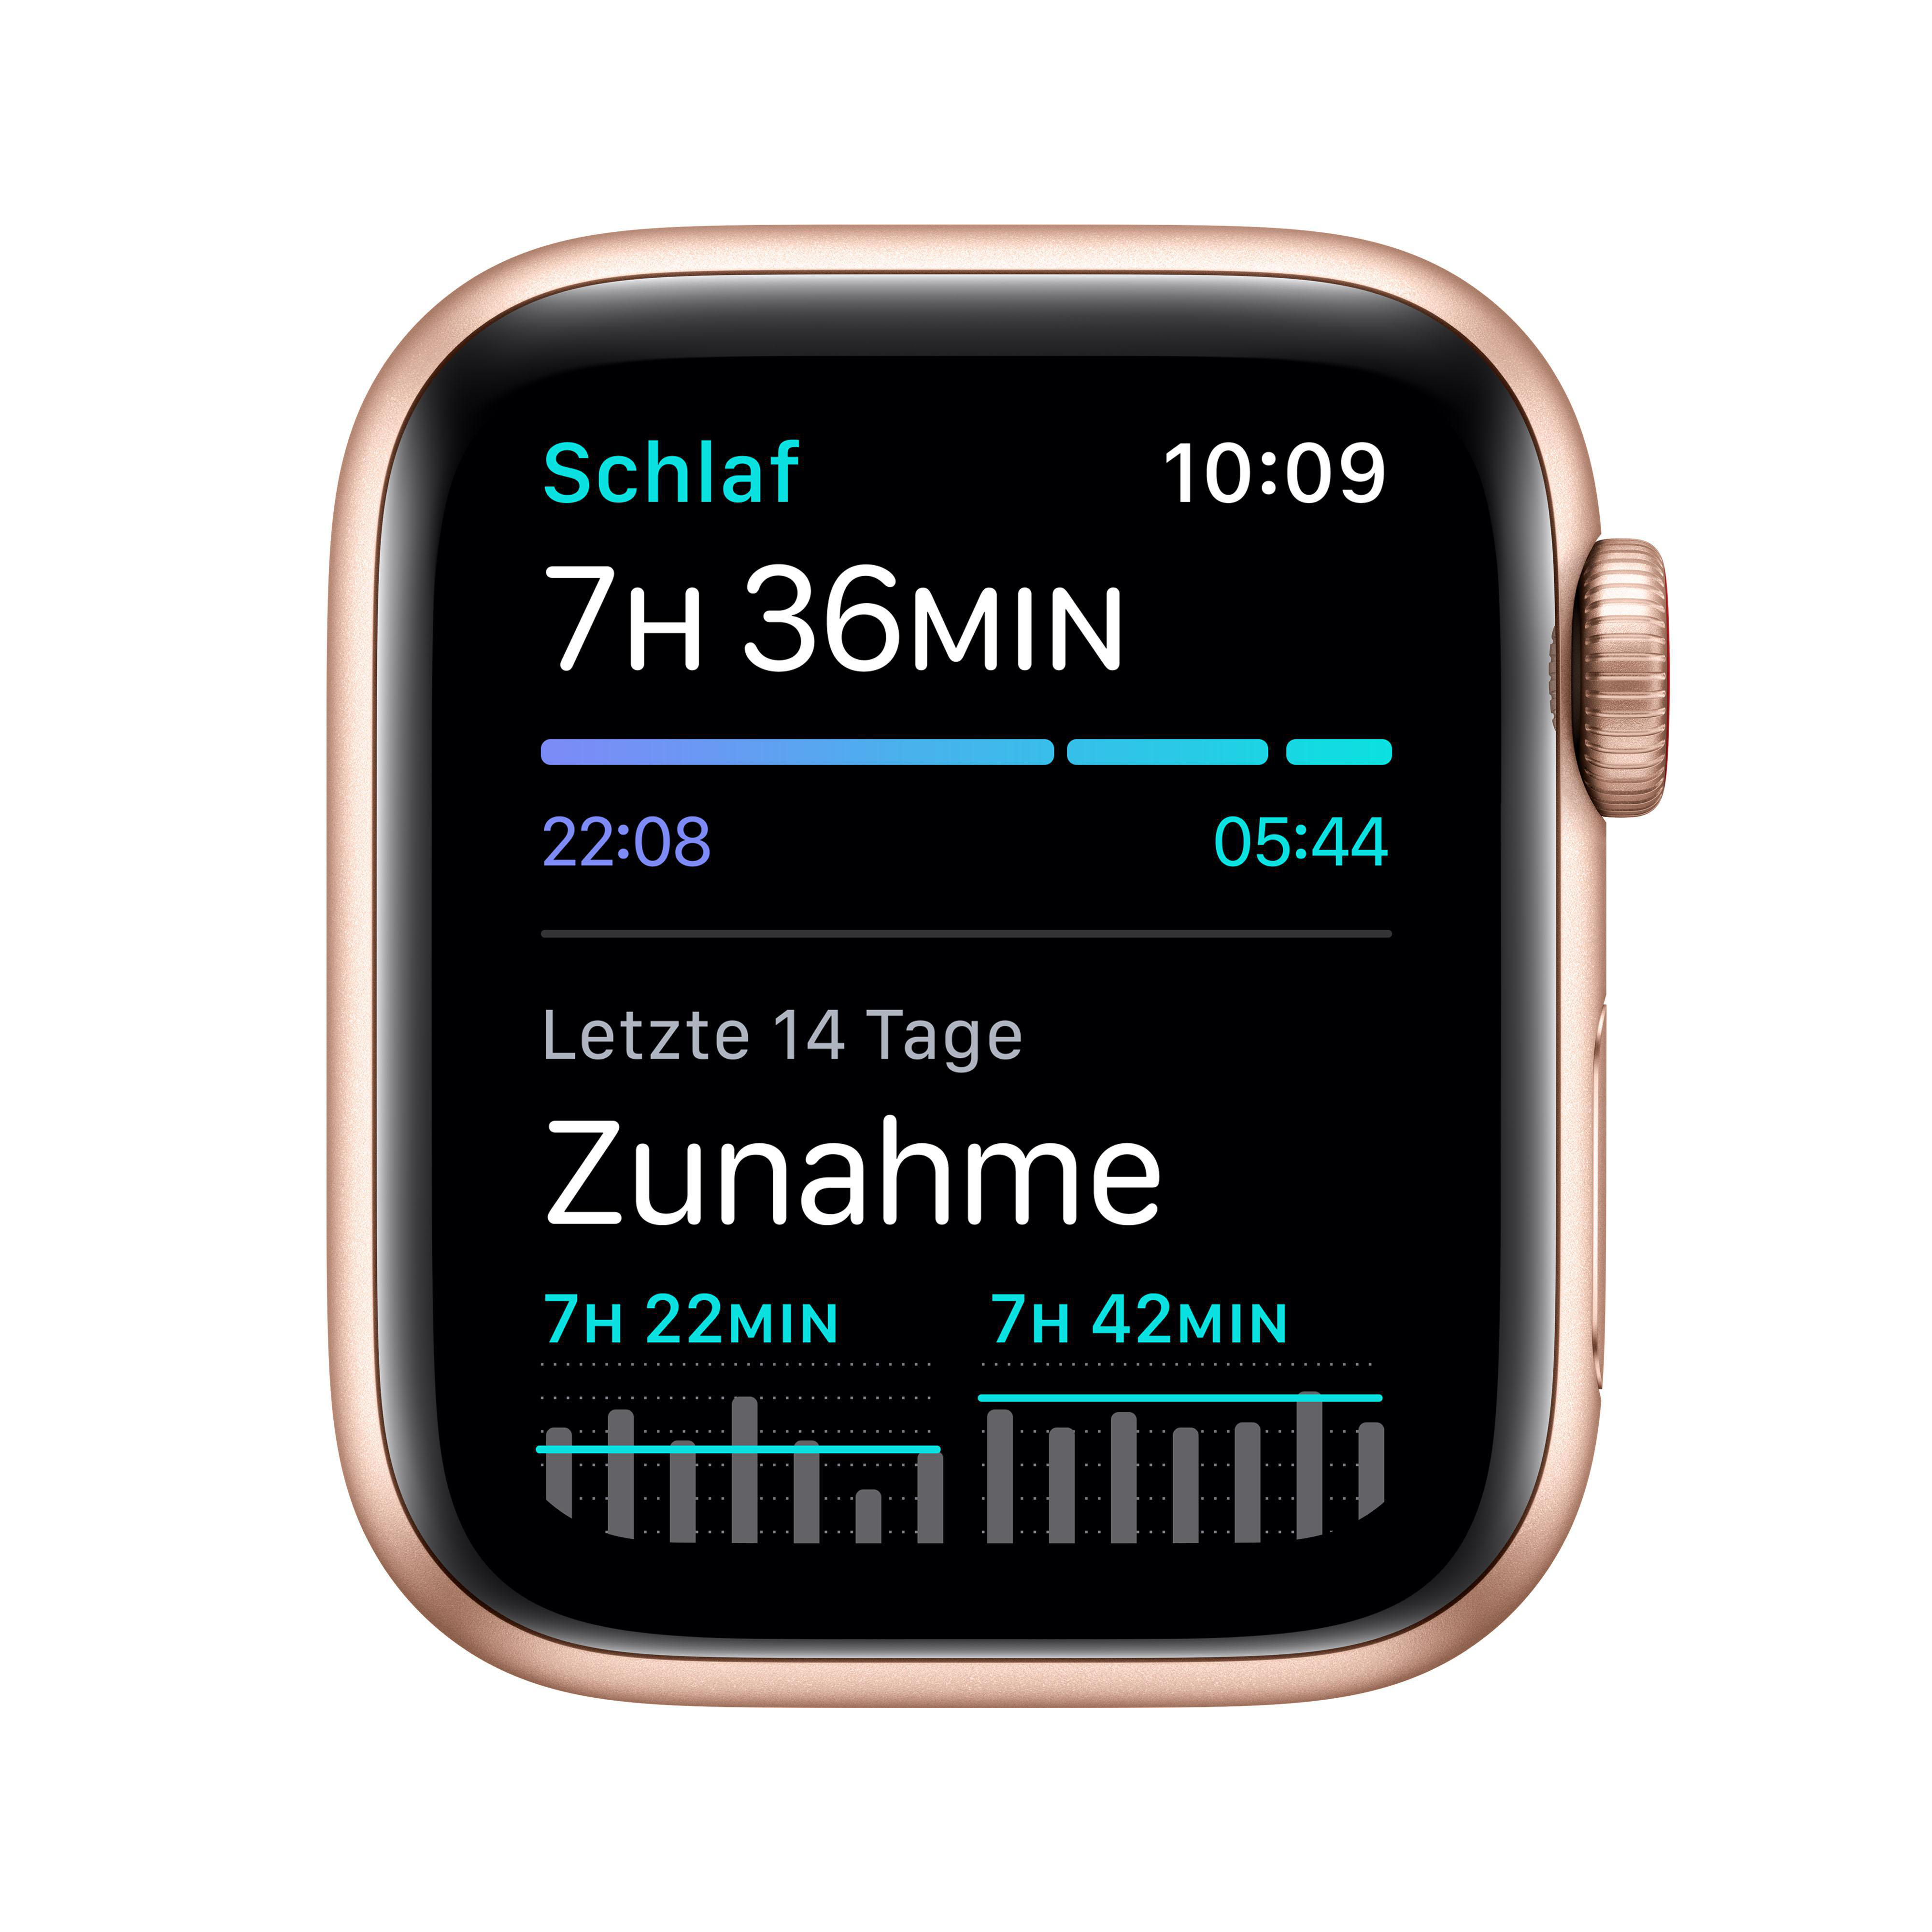 + Watch SE mm, Armband: Gehäuse: (GPS 200 40mm 130 Cellular) Fluorelastomer, APPLE Sand, Pink Smartwatch Gold - Aluminium